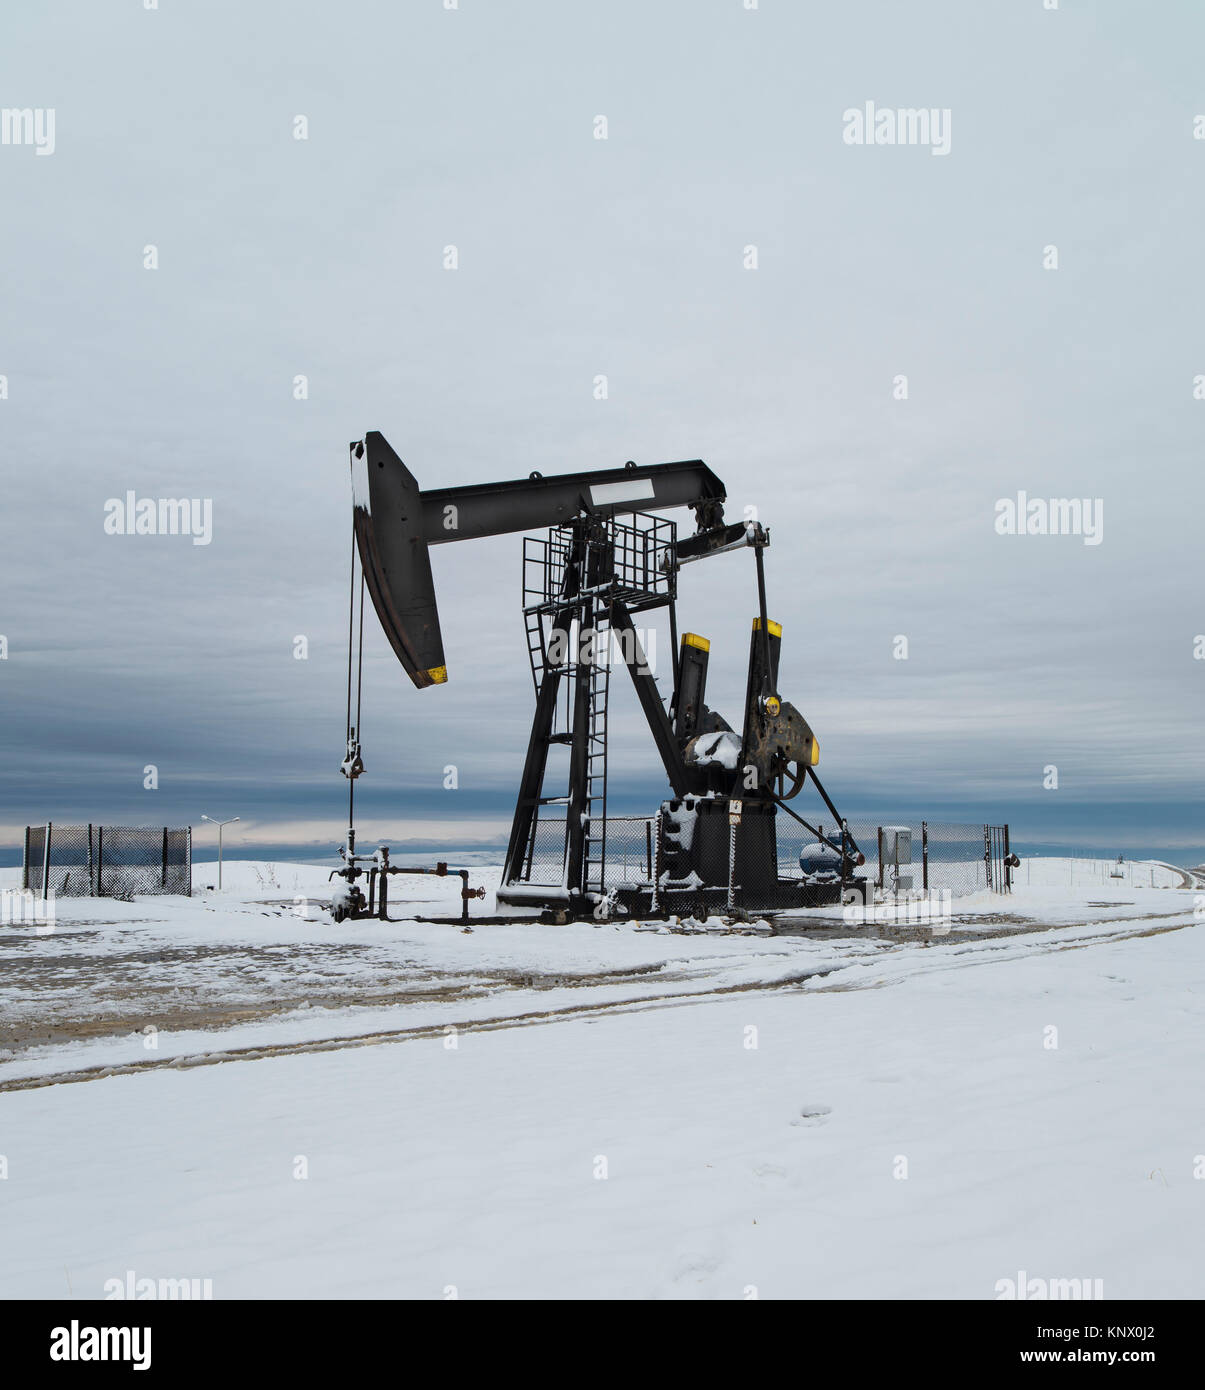 Oil pumps. Oil industry equipment. Winter scene Stock Photo